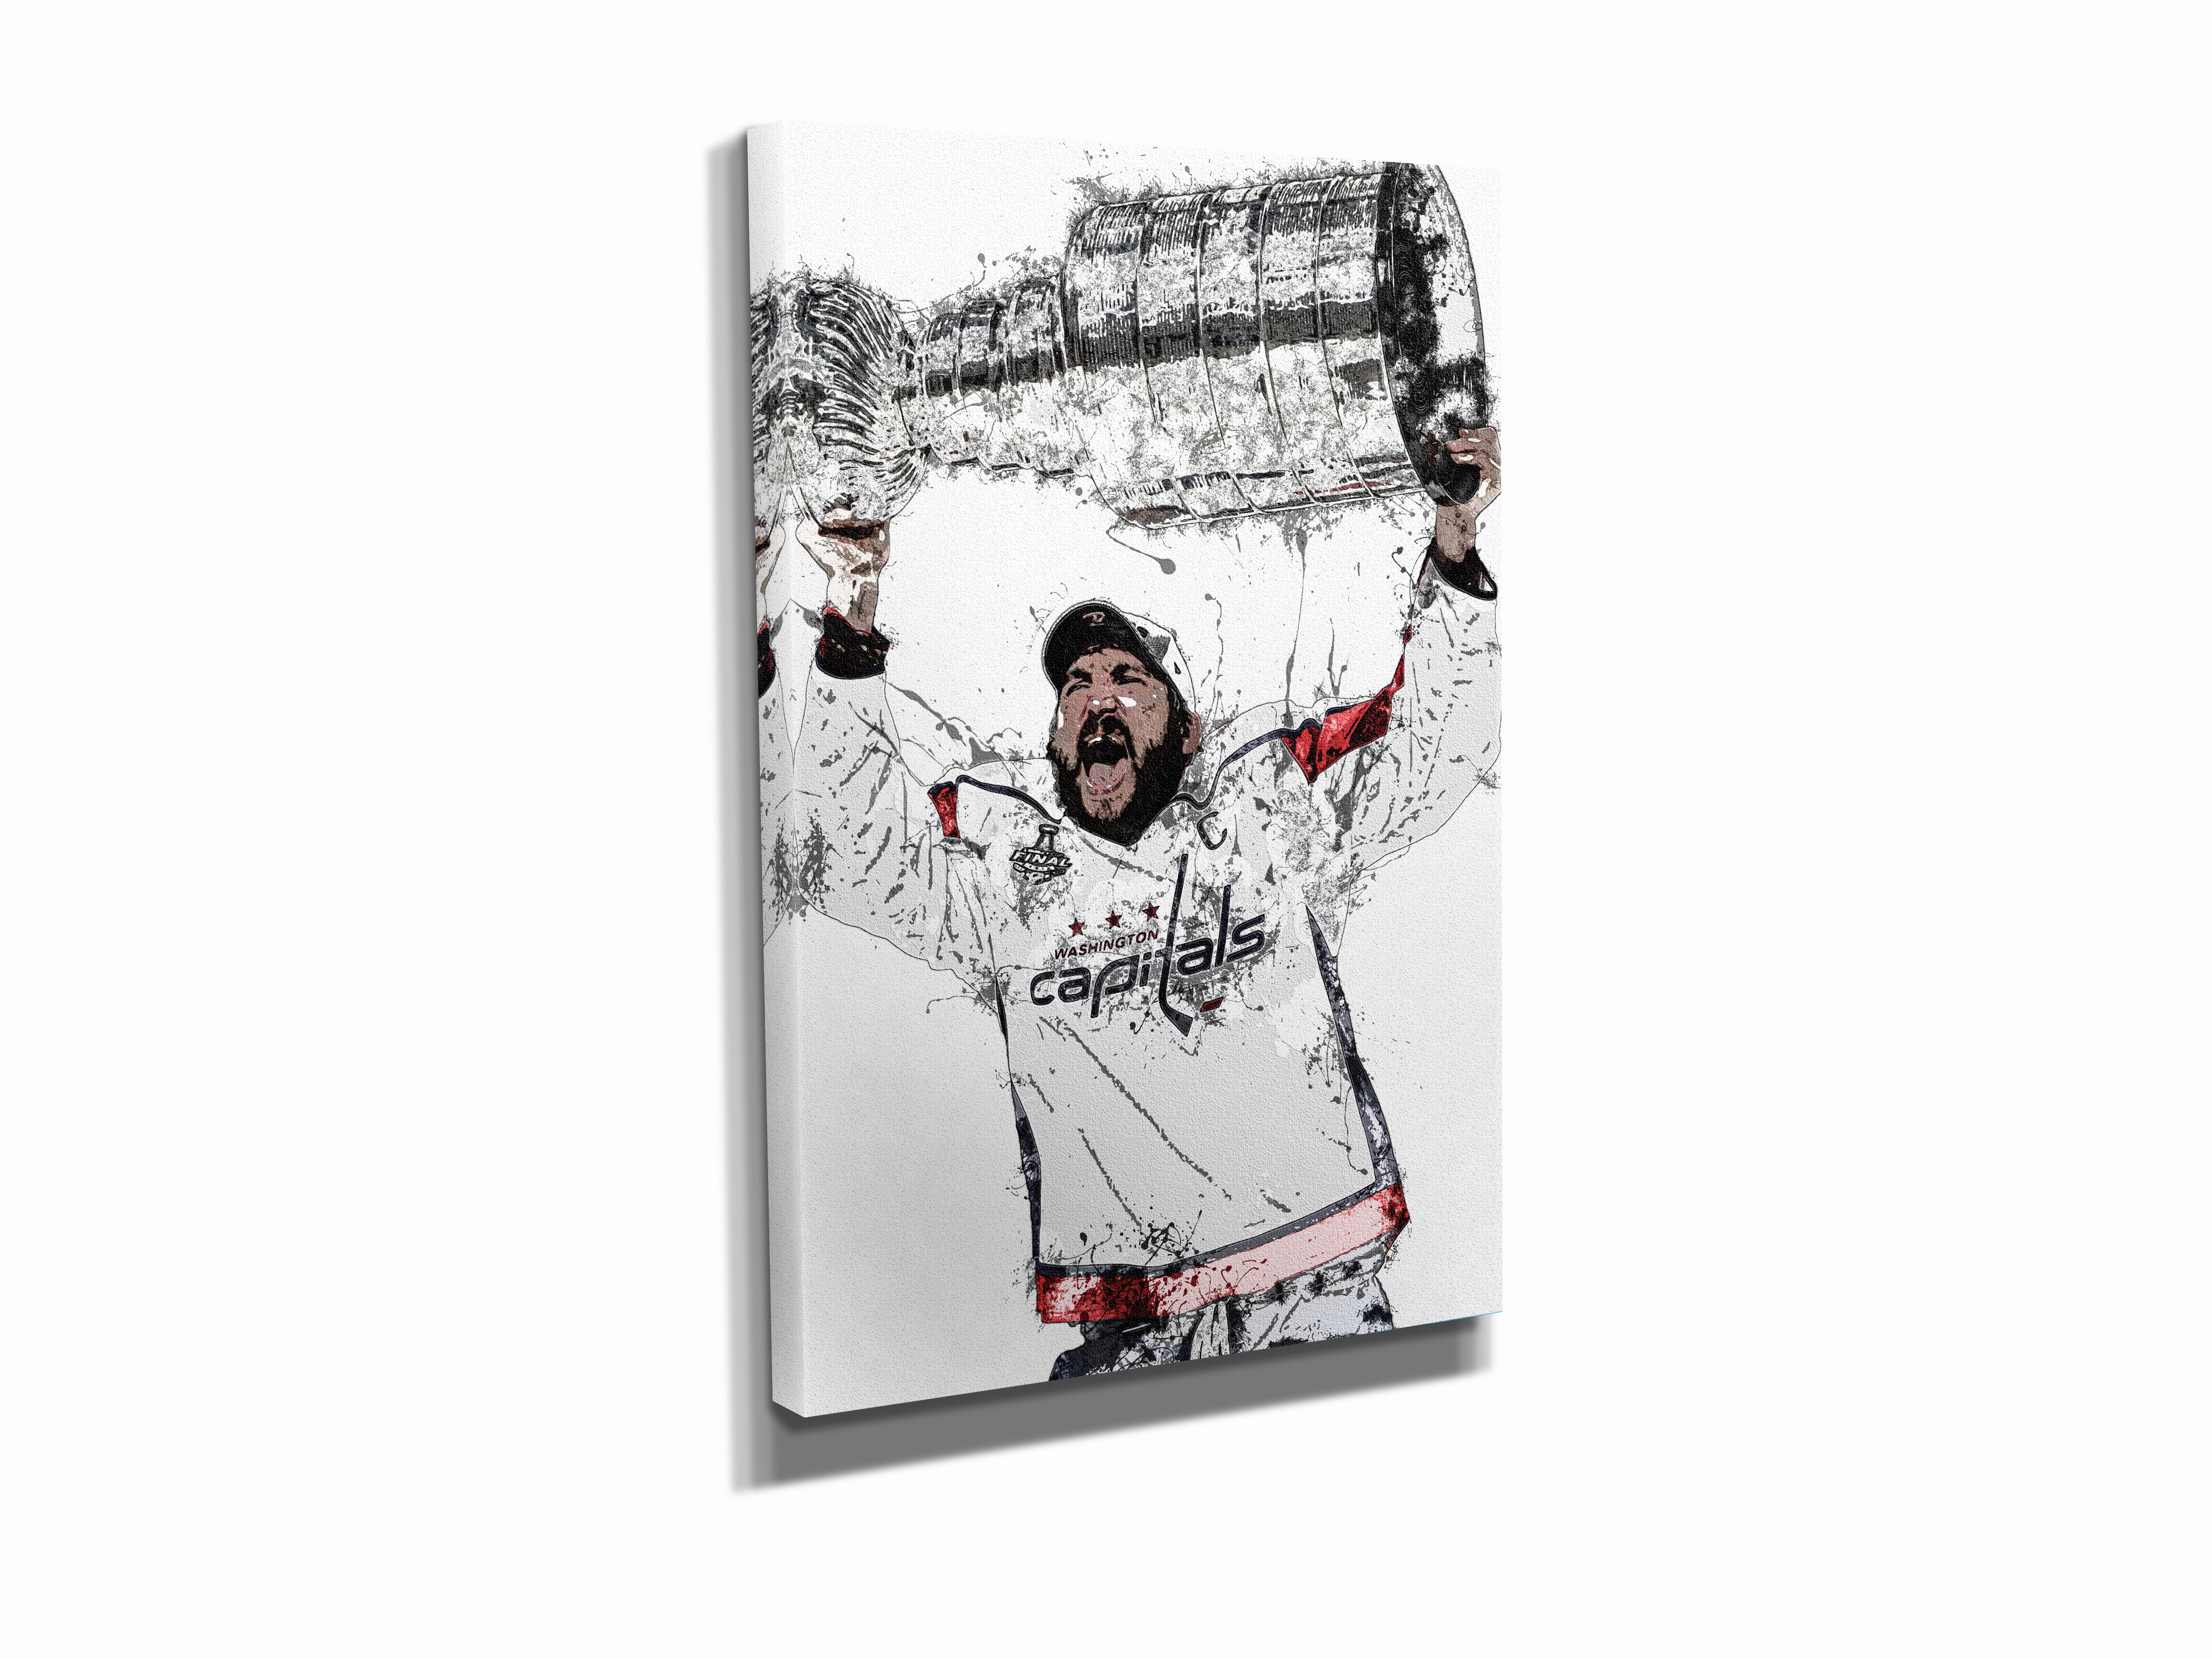 Alexander Ovechkin Finally Wins Stanley Cup Wall Art Home Decor - POSTER  20x30